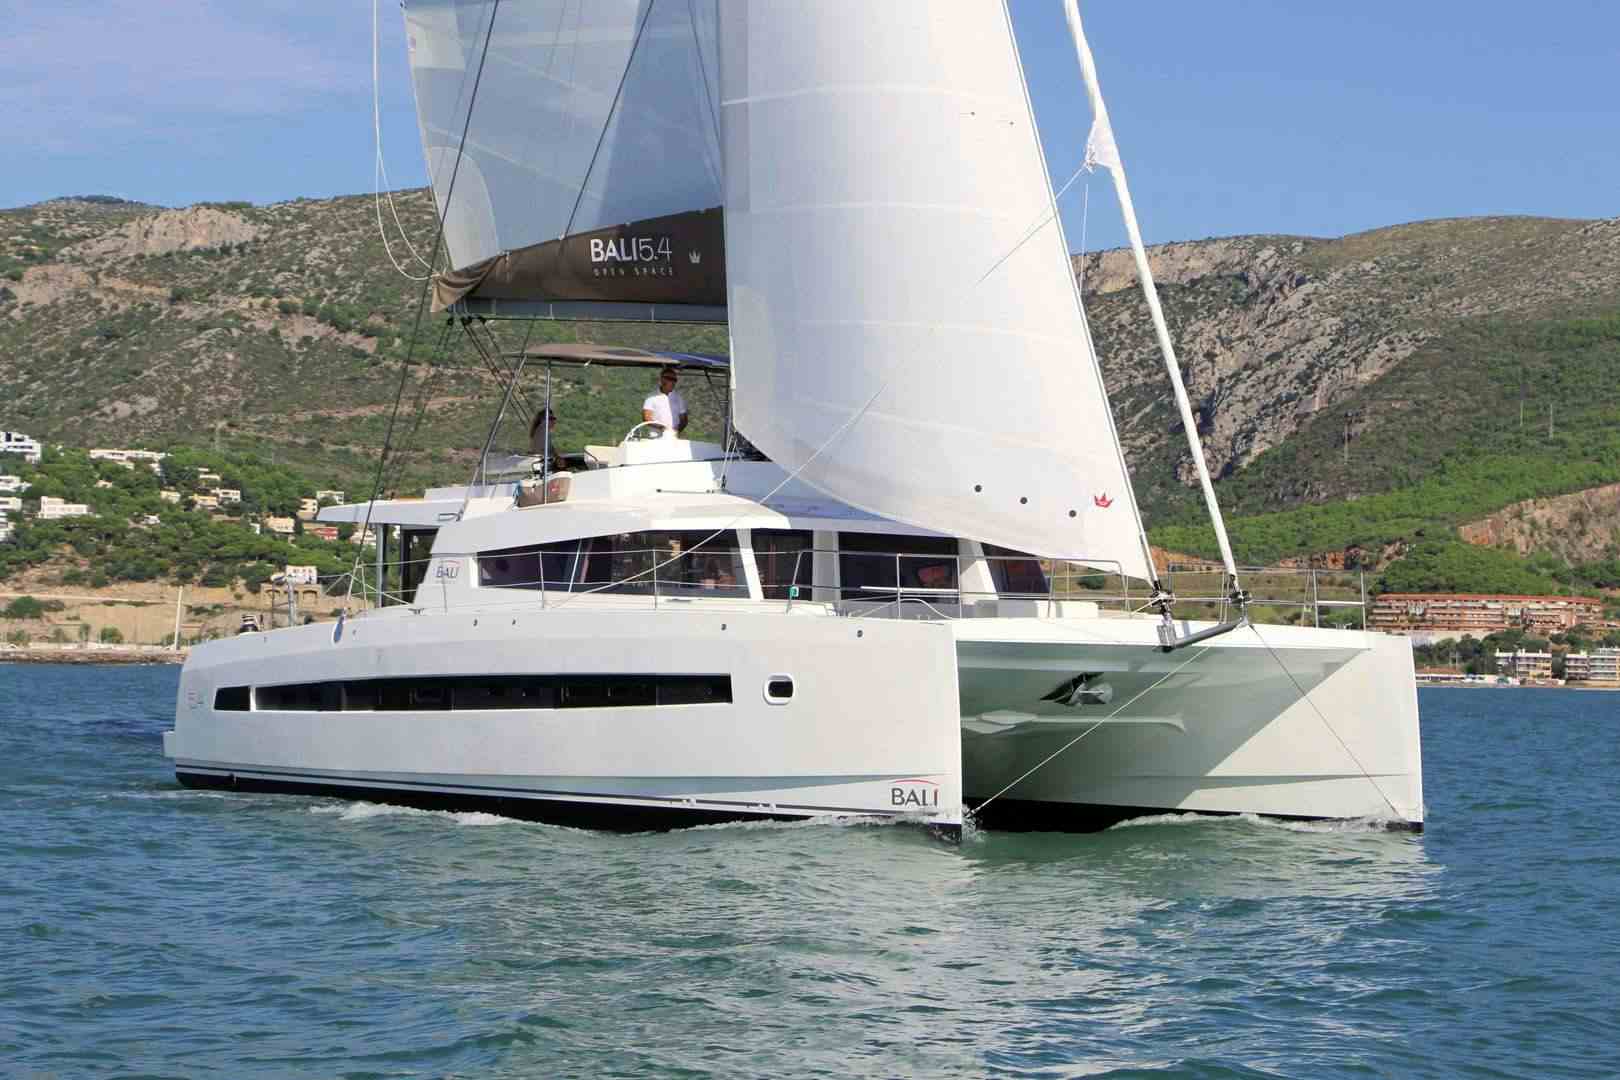 TWO OCEANS - Yacht Charter Mahon & Boat hire in W. Med - Spain/Balearics, Caribbean Leewards, Caribbean Windwards, Caribbean Virgin Islands (BVI) 1